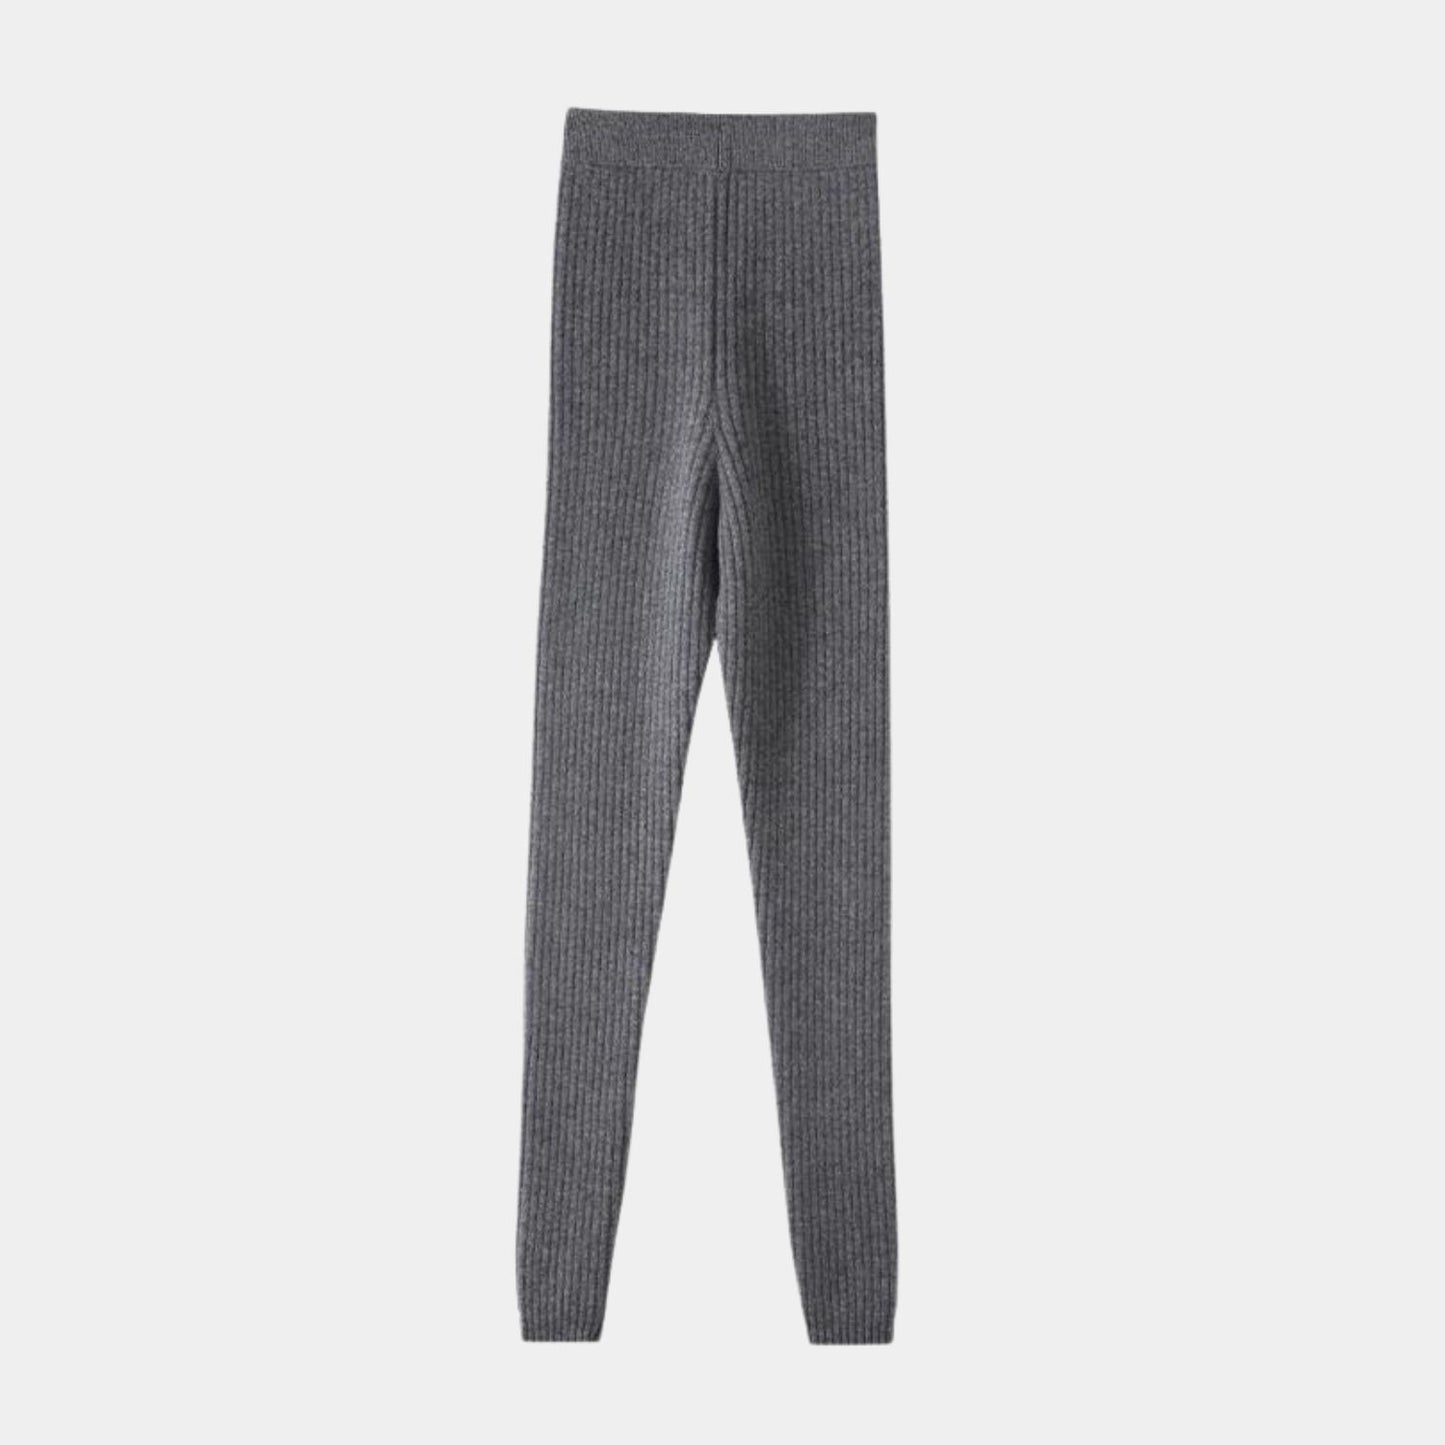 Cashmere knit leggings| Fitted Pants | Women’s knitwear